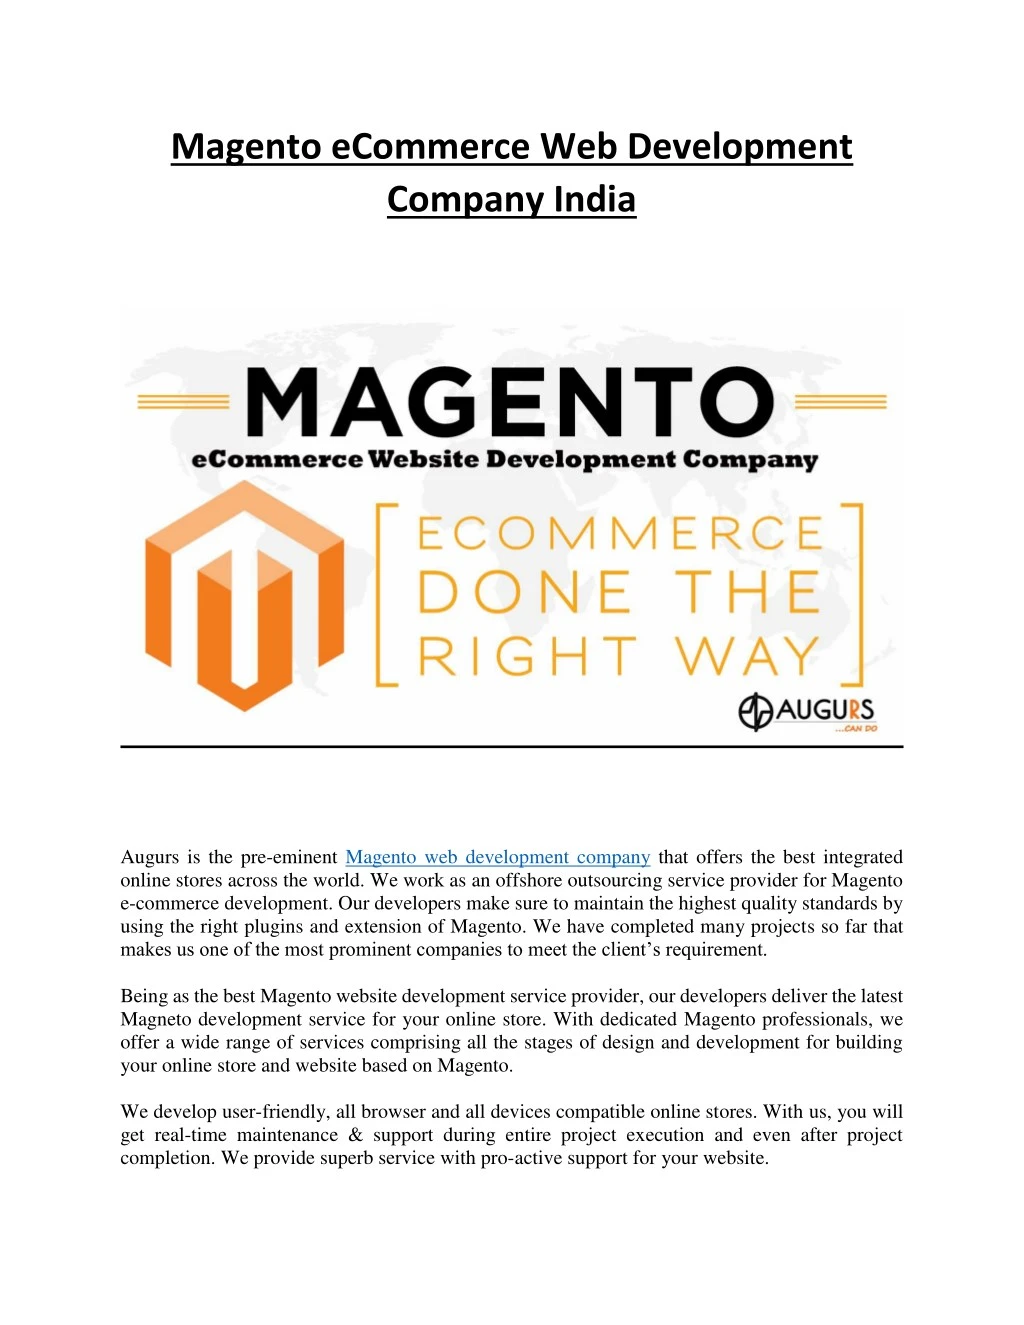 magento ecommerce web development company india